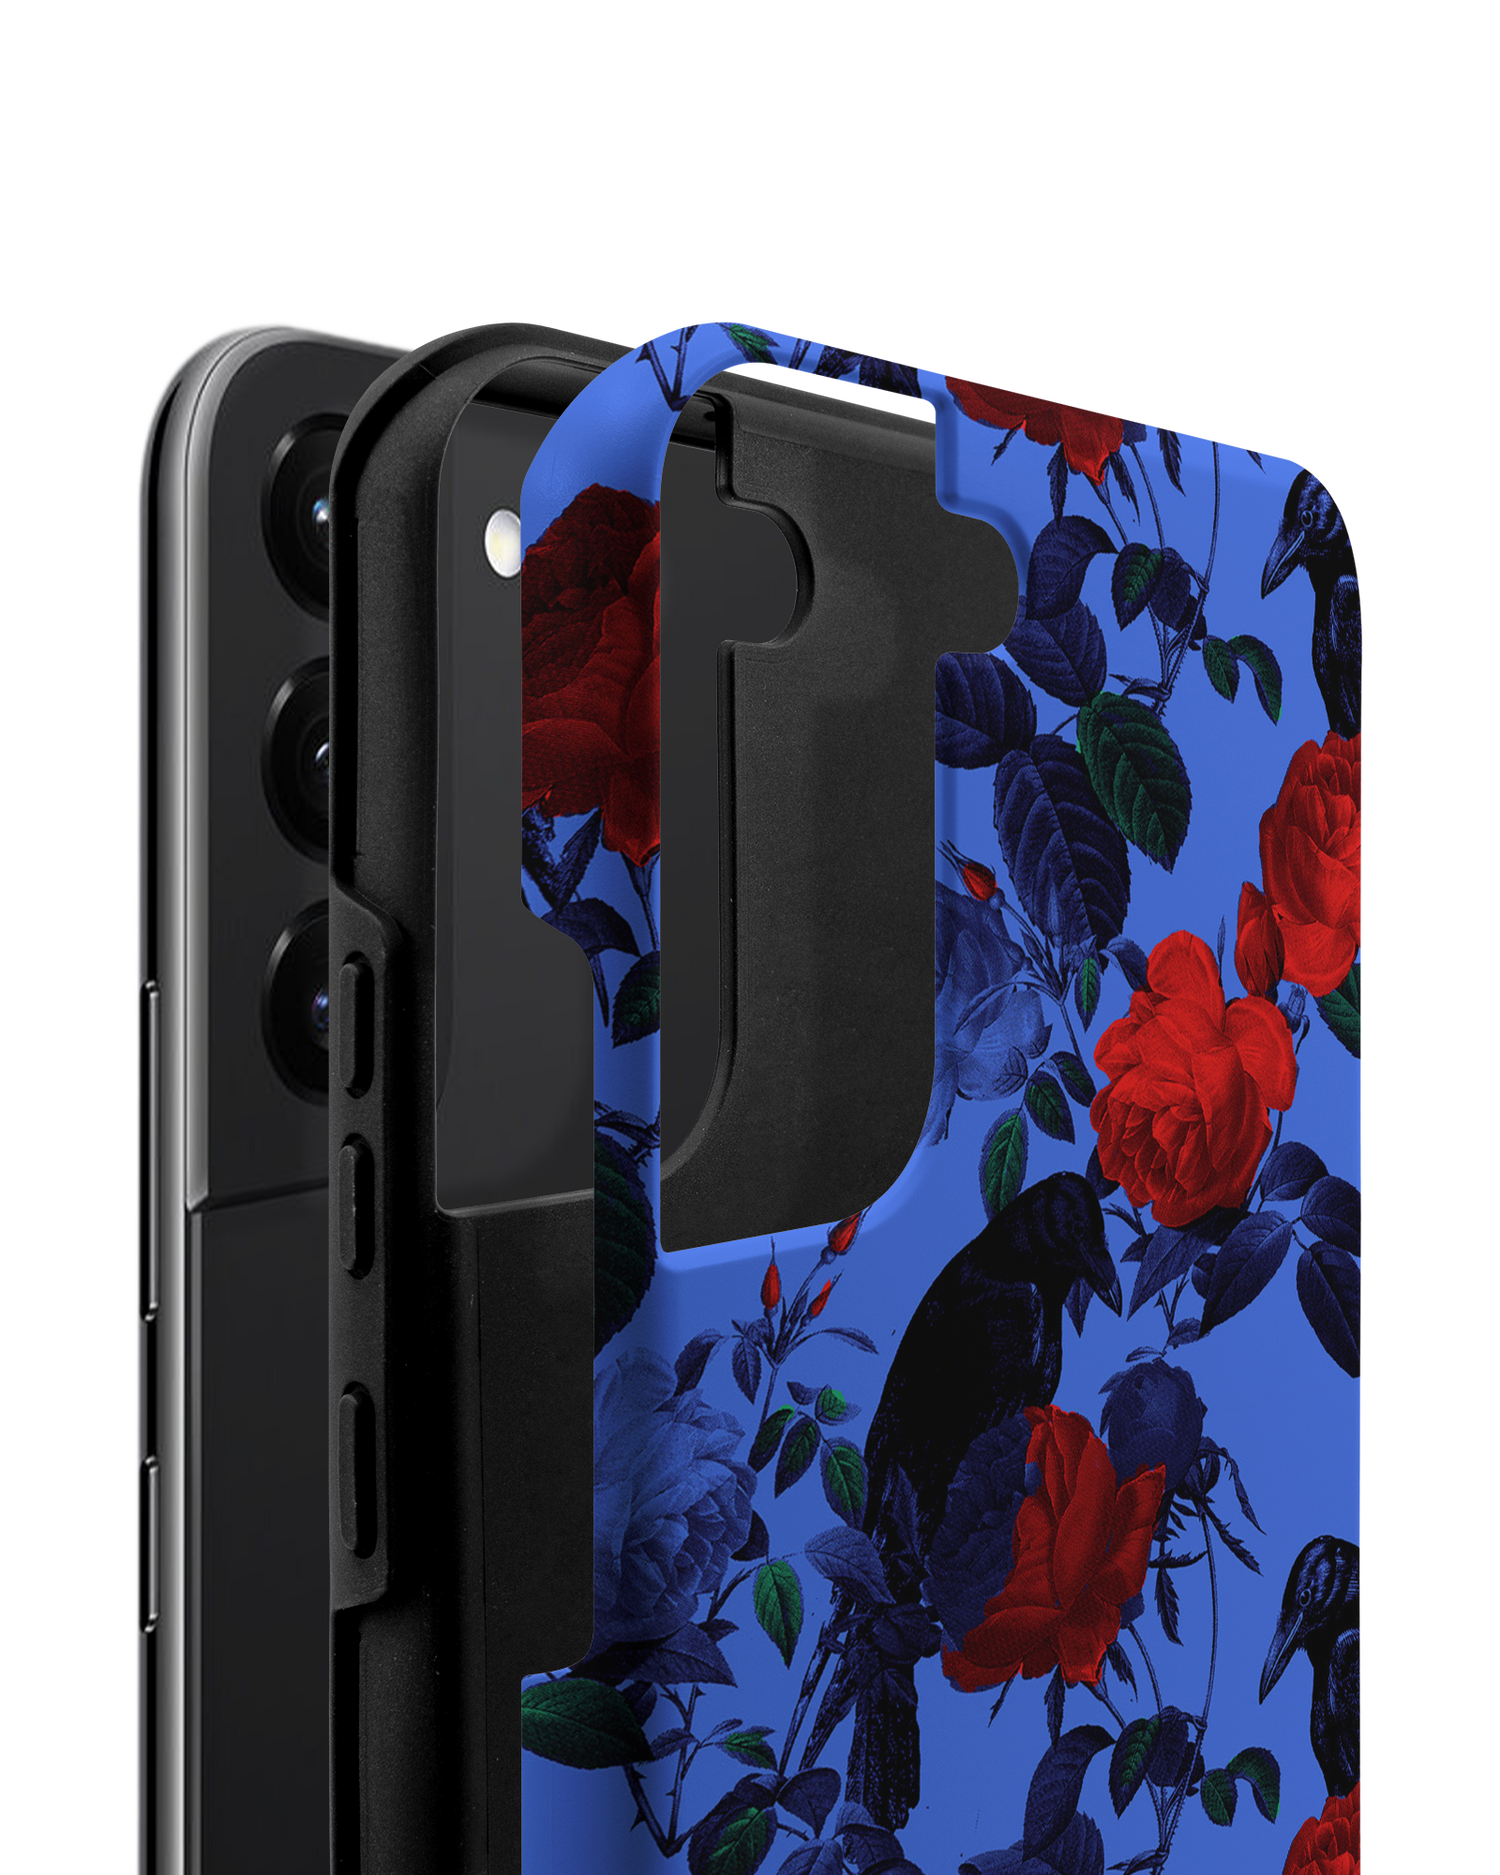 Roses And Ravens Premium Phone Case Samsung Galaxy S22 Plus 5G consisting of 2 parts